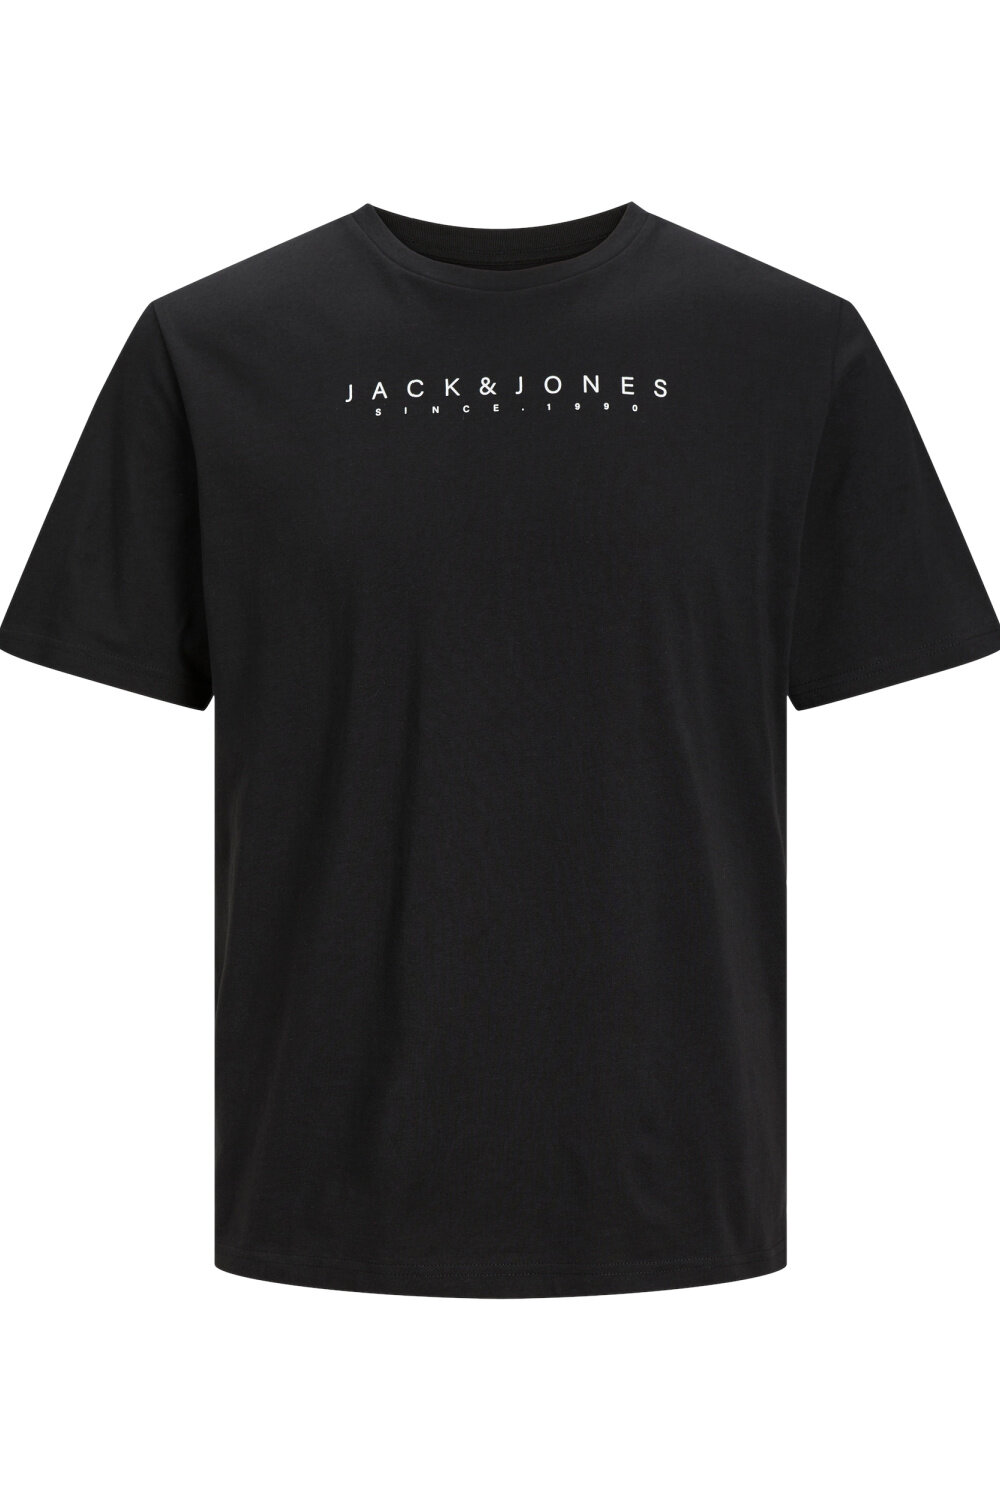 Jack & Jones tshirt mod jjsetra tee ss crew neck(3 colours)